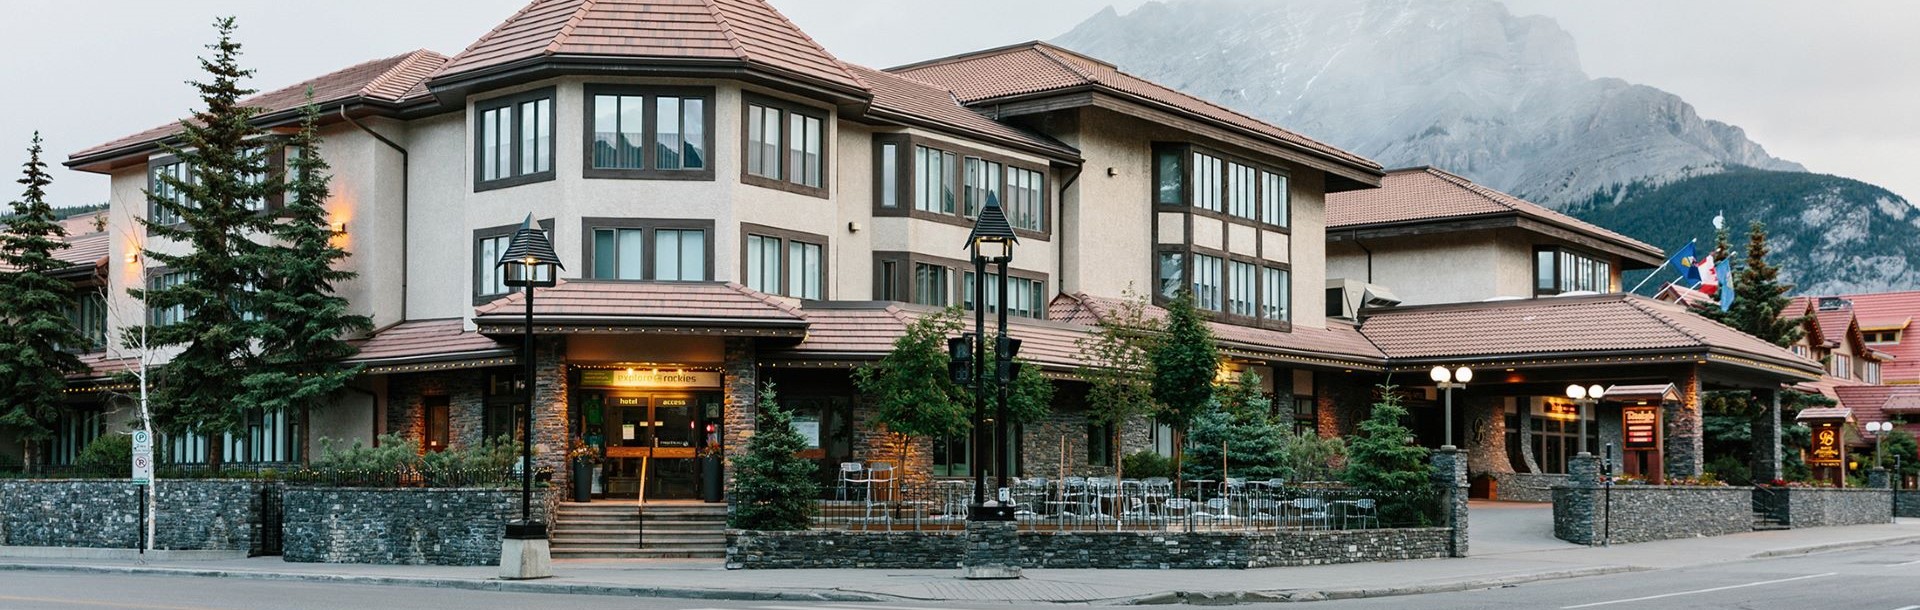 Elk and Avenue Hotel, Banff